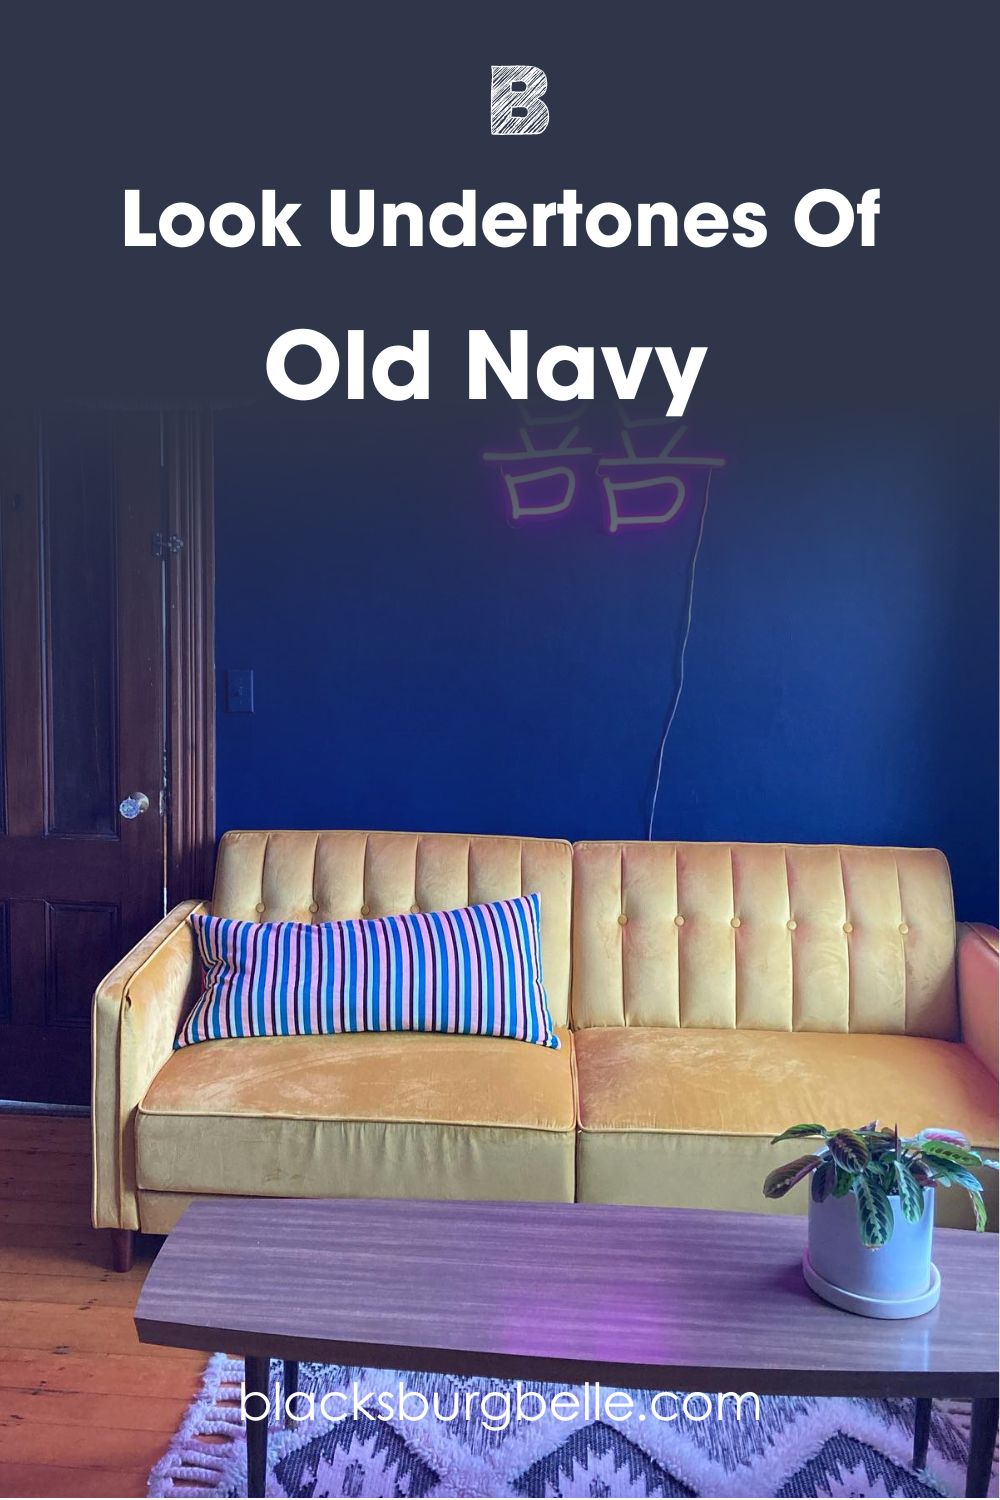 A Closer Look at Old Navy Undertones